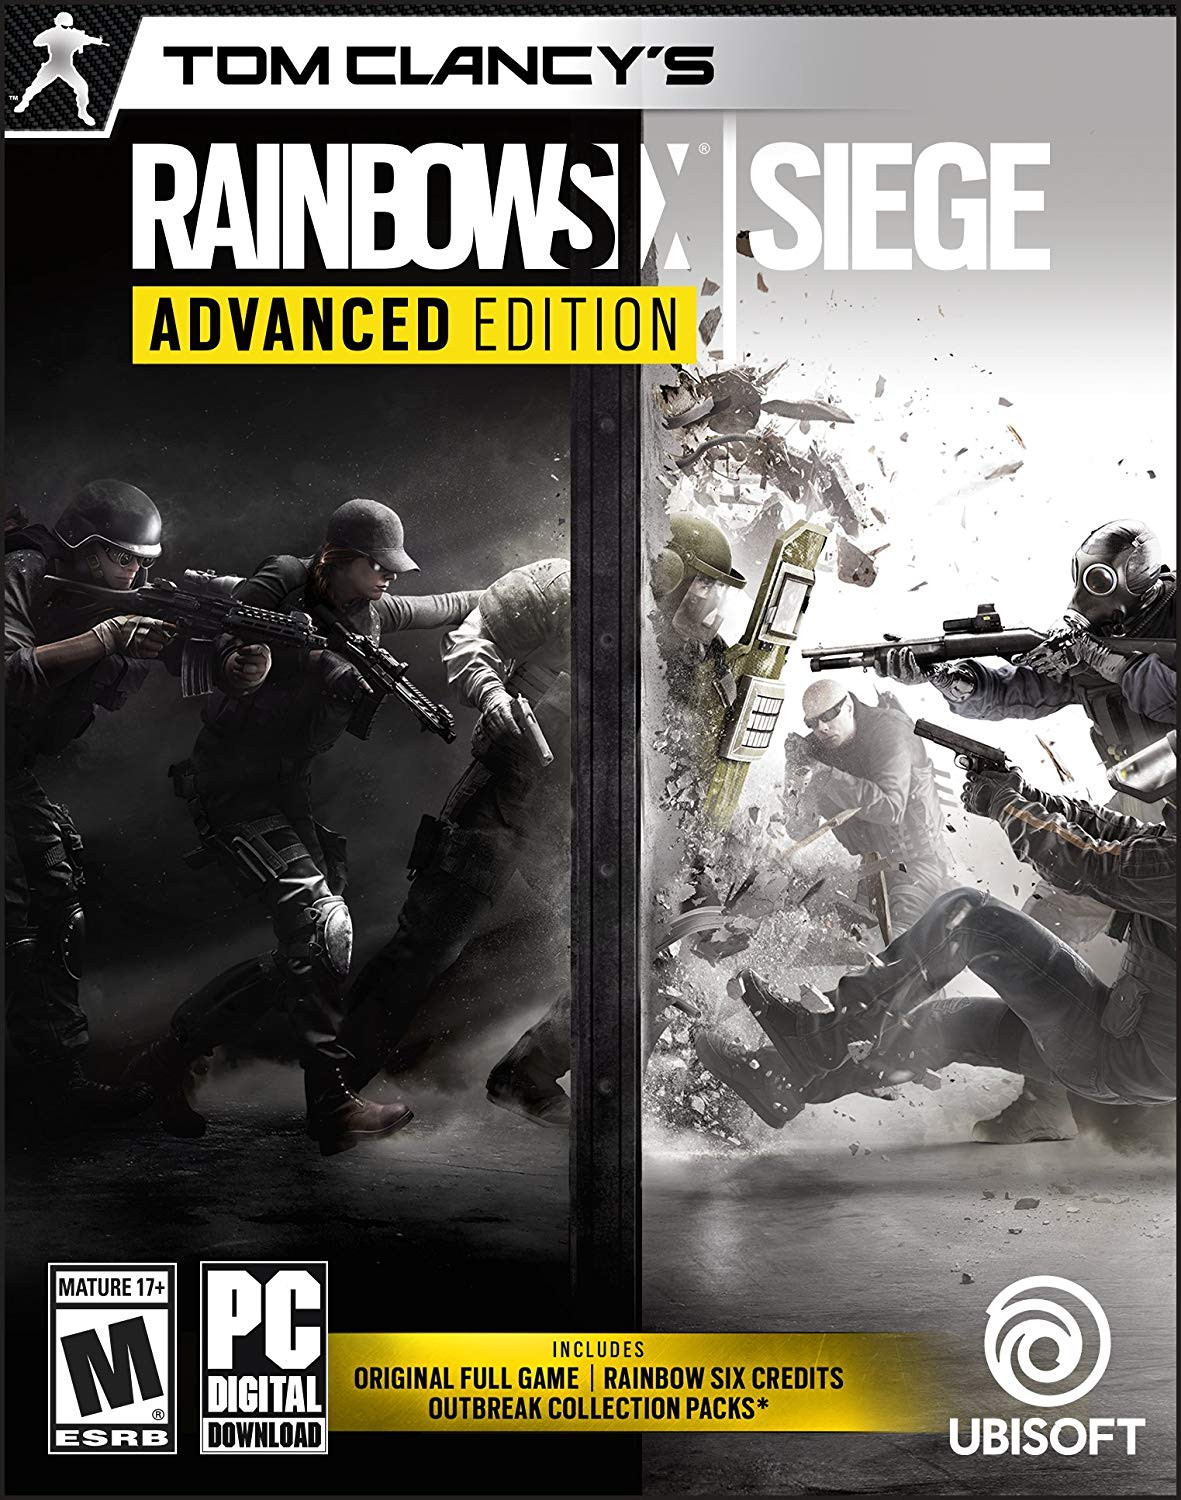 Rainbow 6 Siege Printable Maps Lovely Amazon Tom Clancy S Rainbow Six Siege Advanced Edition